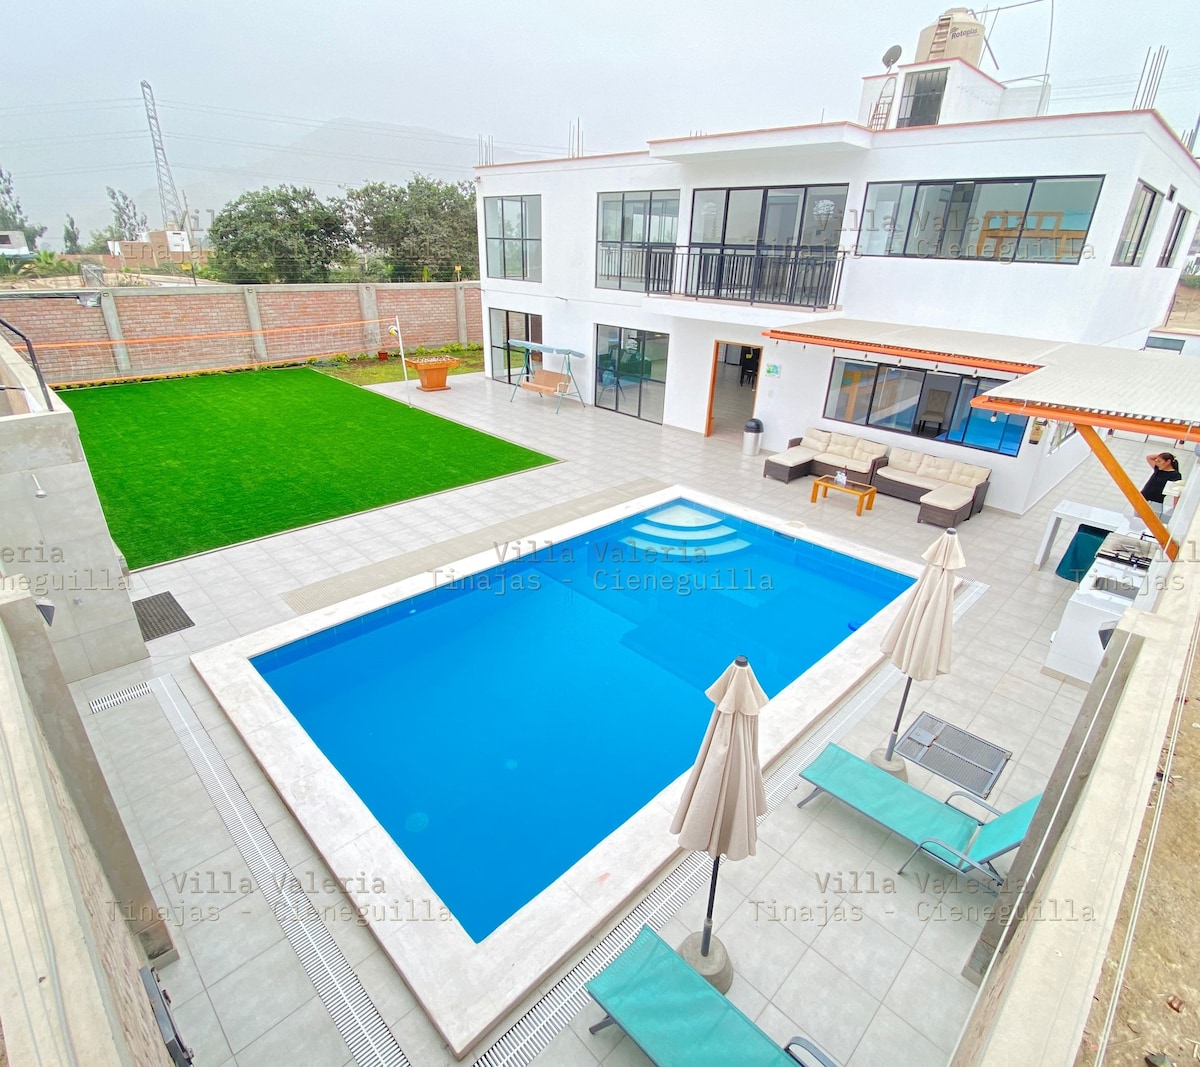 Cieneguilla带钢化游泳池的Casa de Campo